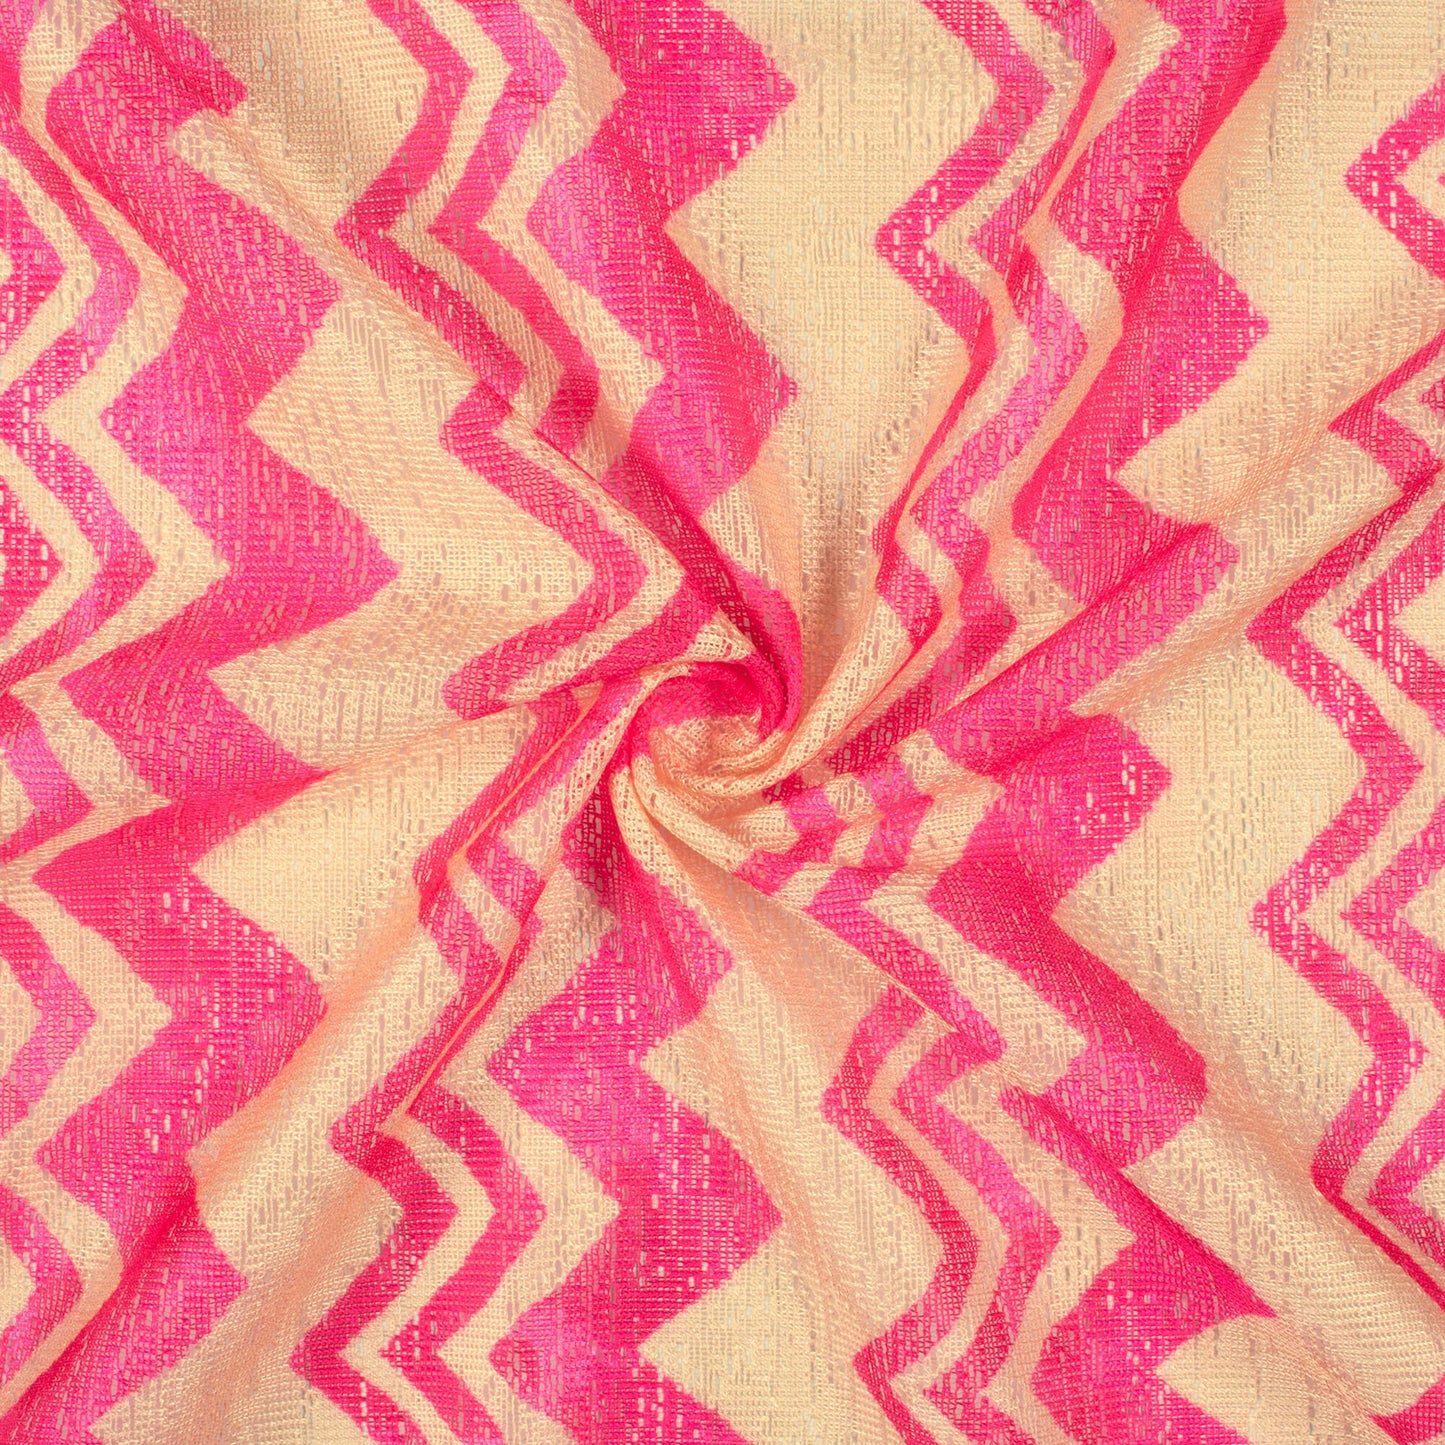 Hot Pink And Beige Chevron Pattern Digital Print Raschel Net Fabric (Width 58 Inches)